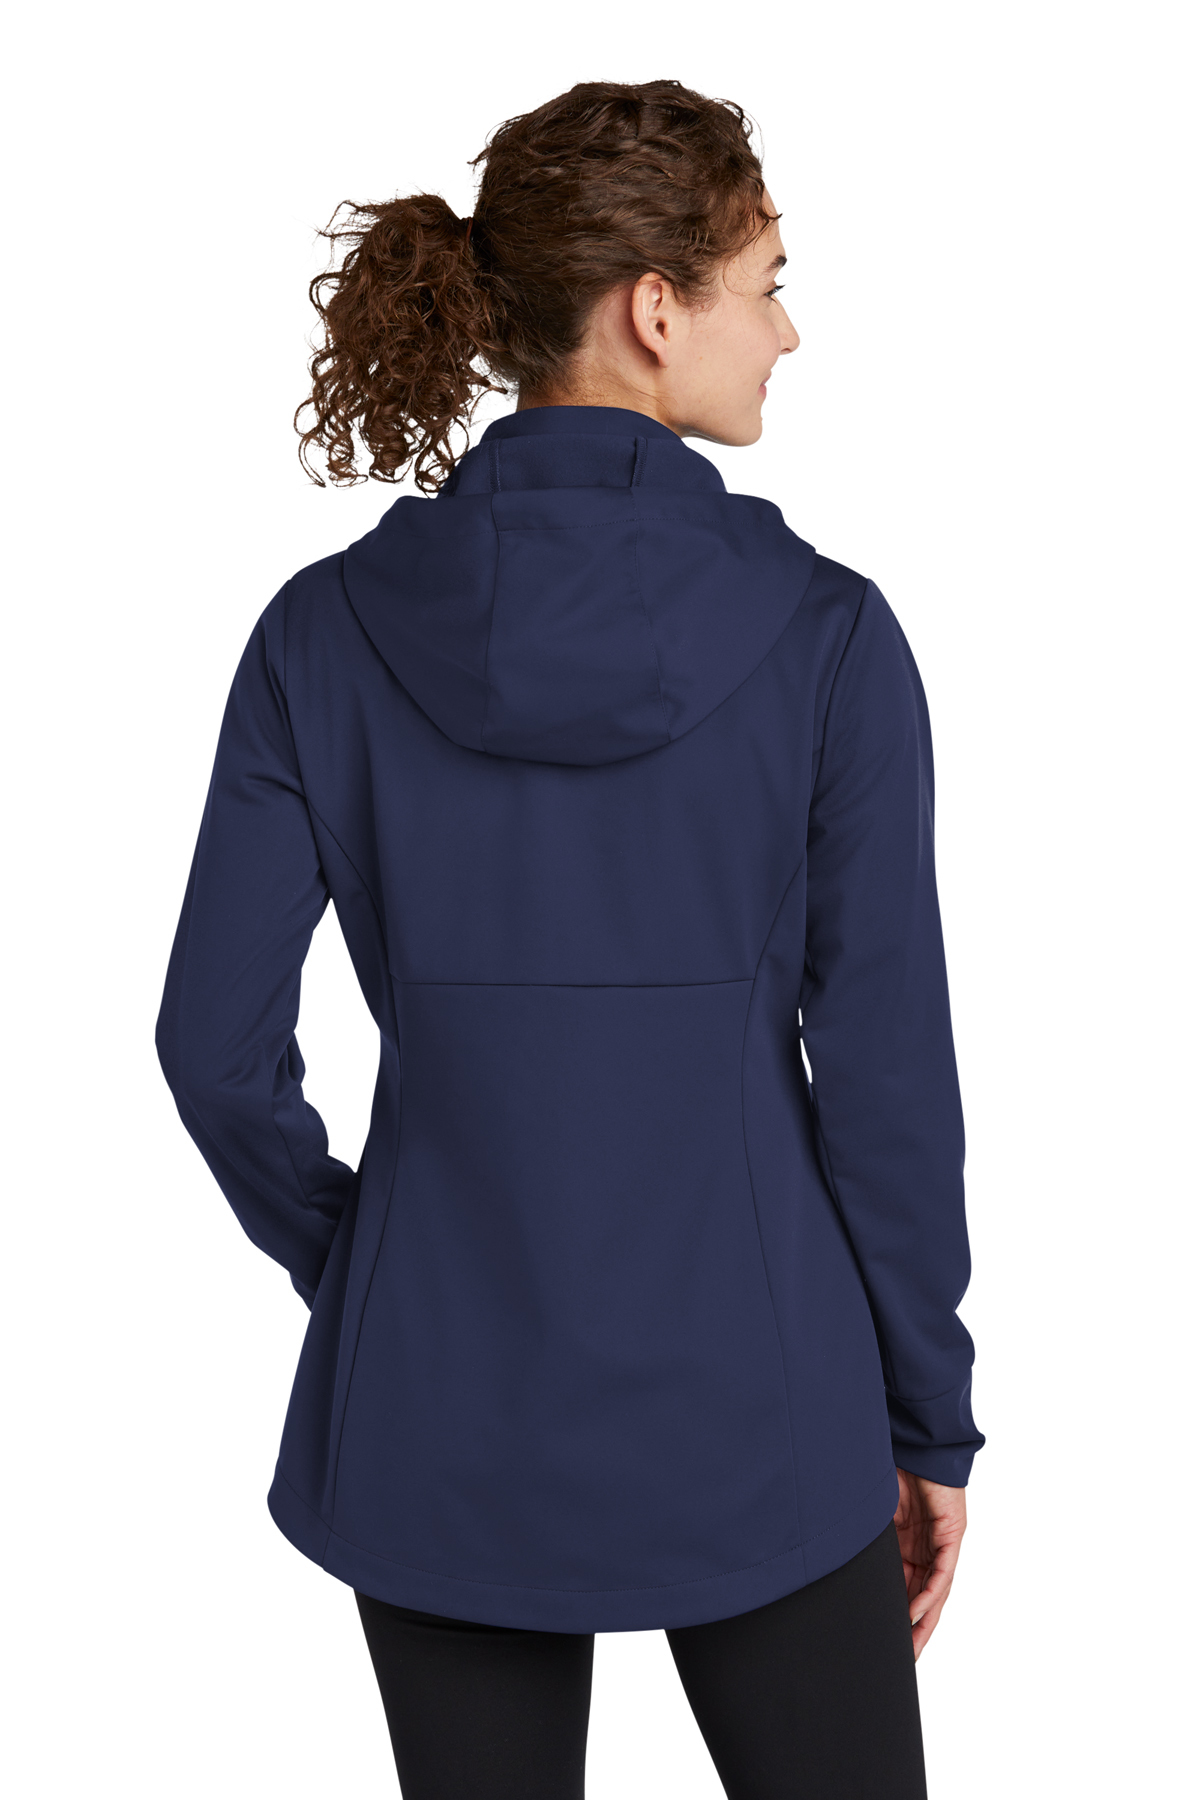 Sport-Tek Ladies Hooded Soft Shell Jacket | Product | SanMar